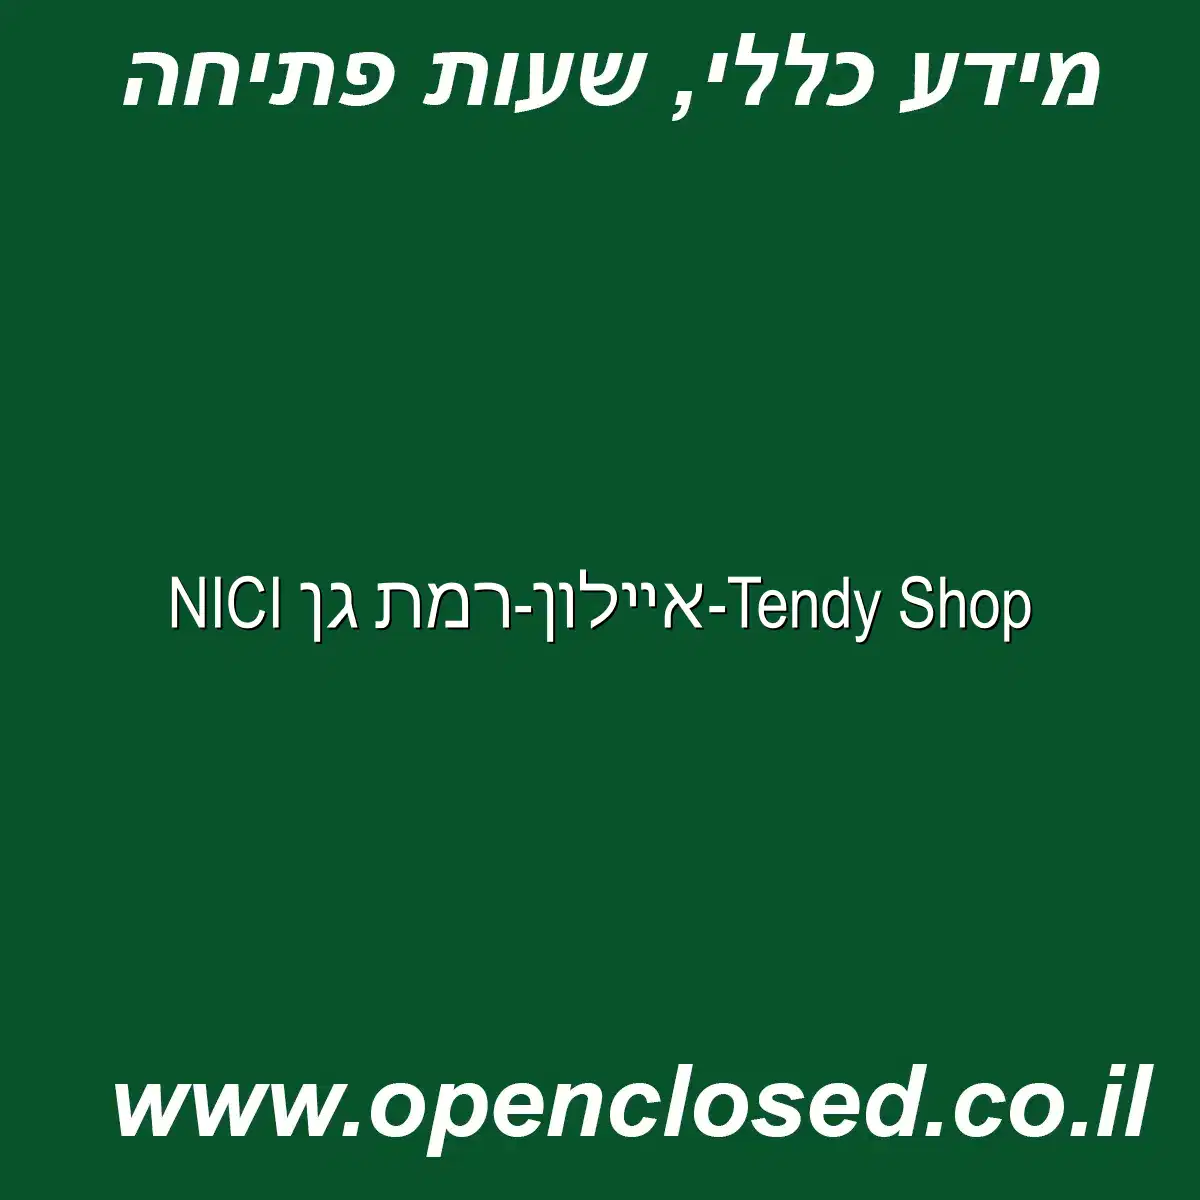 NICI איילון-רמת גן-Tendy Shop